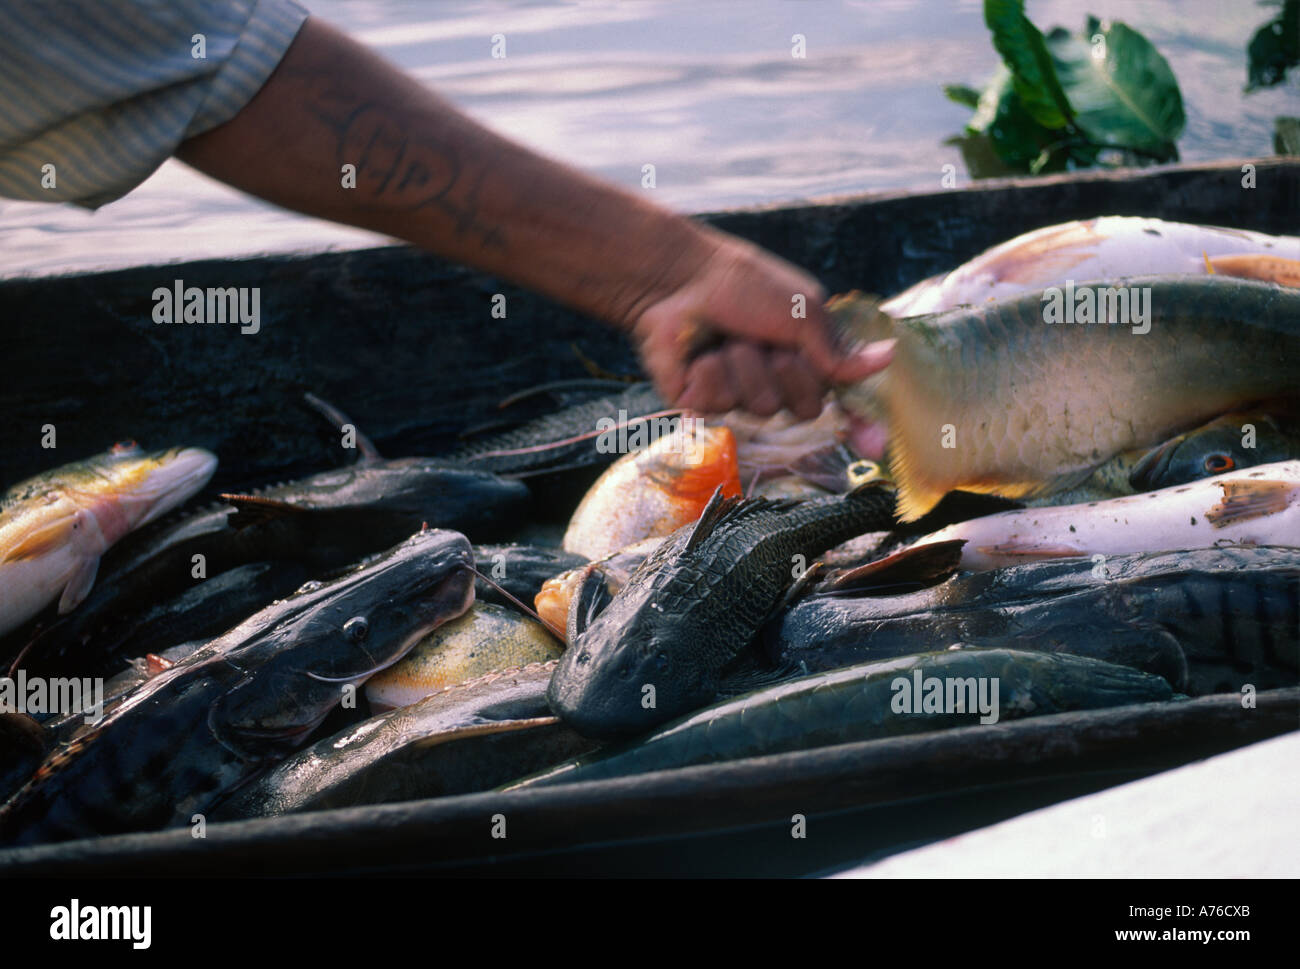 Amazon river fish catch Stock Photo